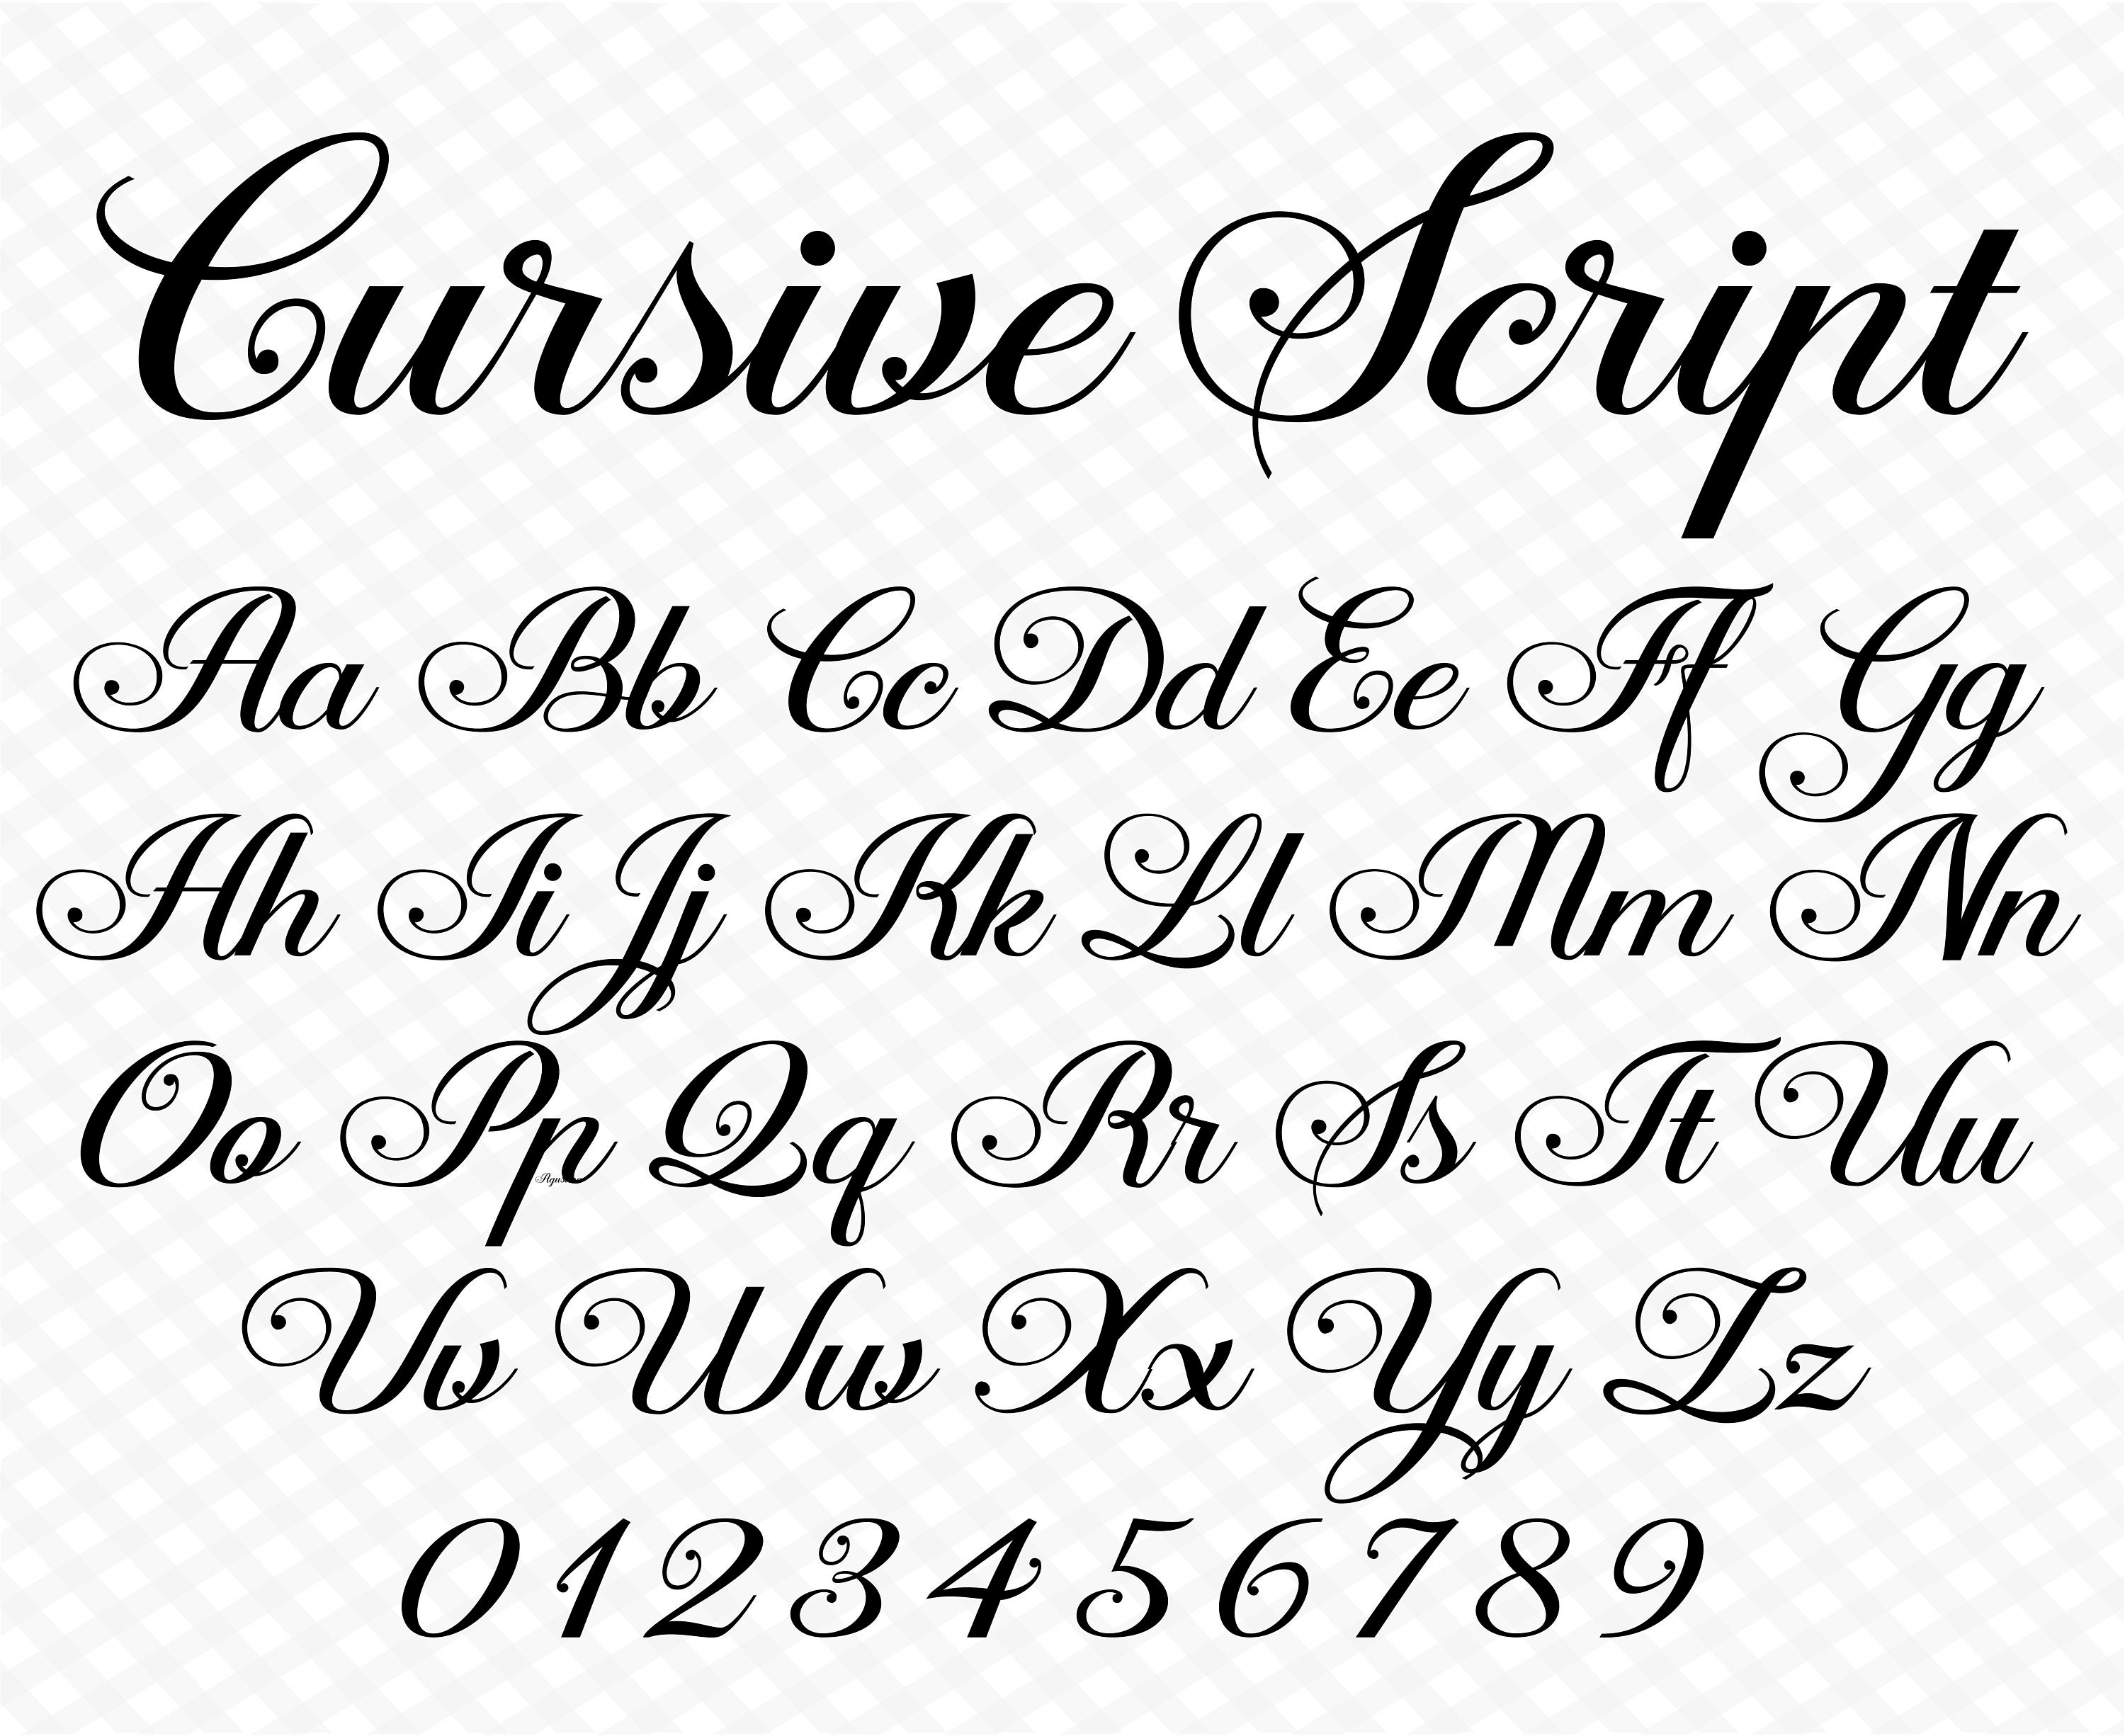 Cursive Font Cursive Script Font Wedding Font Invate Font - Etsy Australia